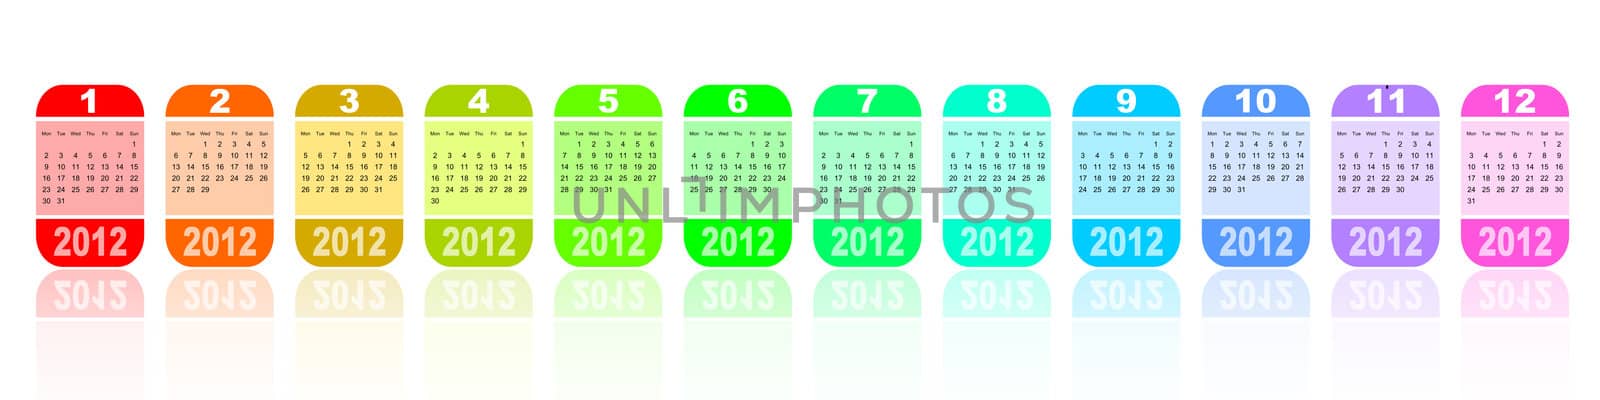 2012 colorful calendar by alexwhite